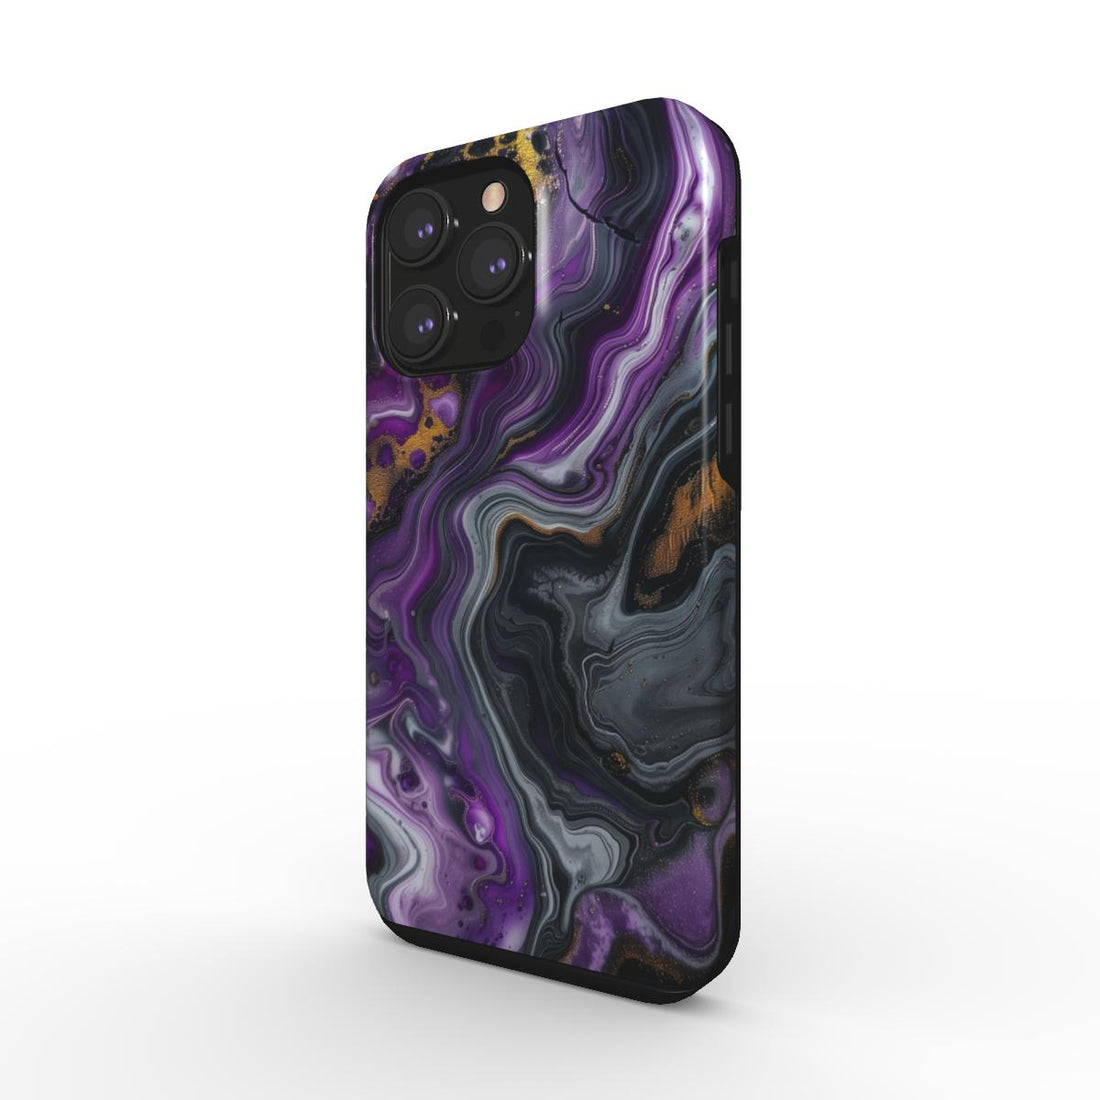 Nebula Nights Tough Phone Case | Cosmic & Durable Protection